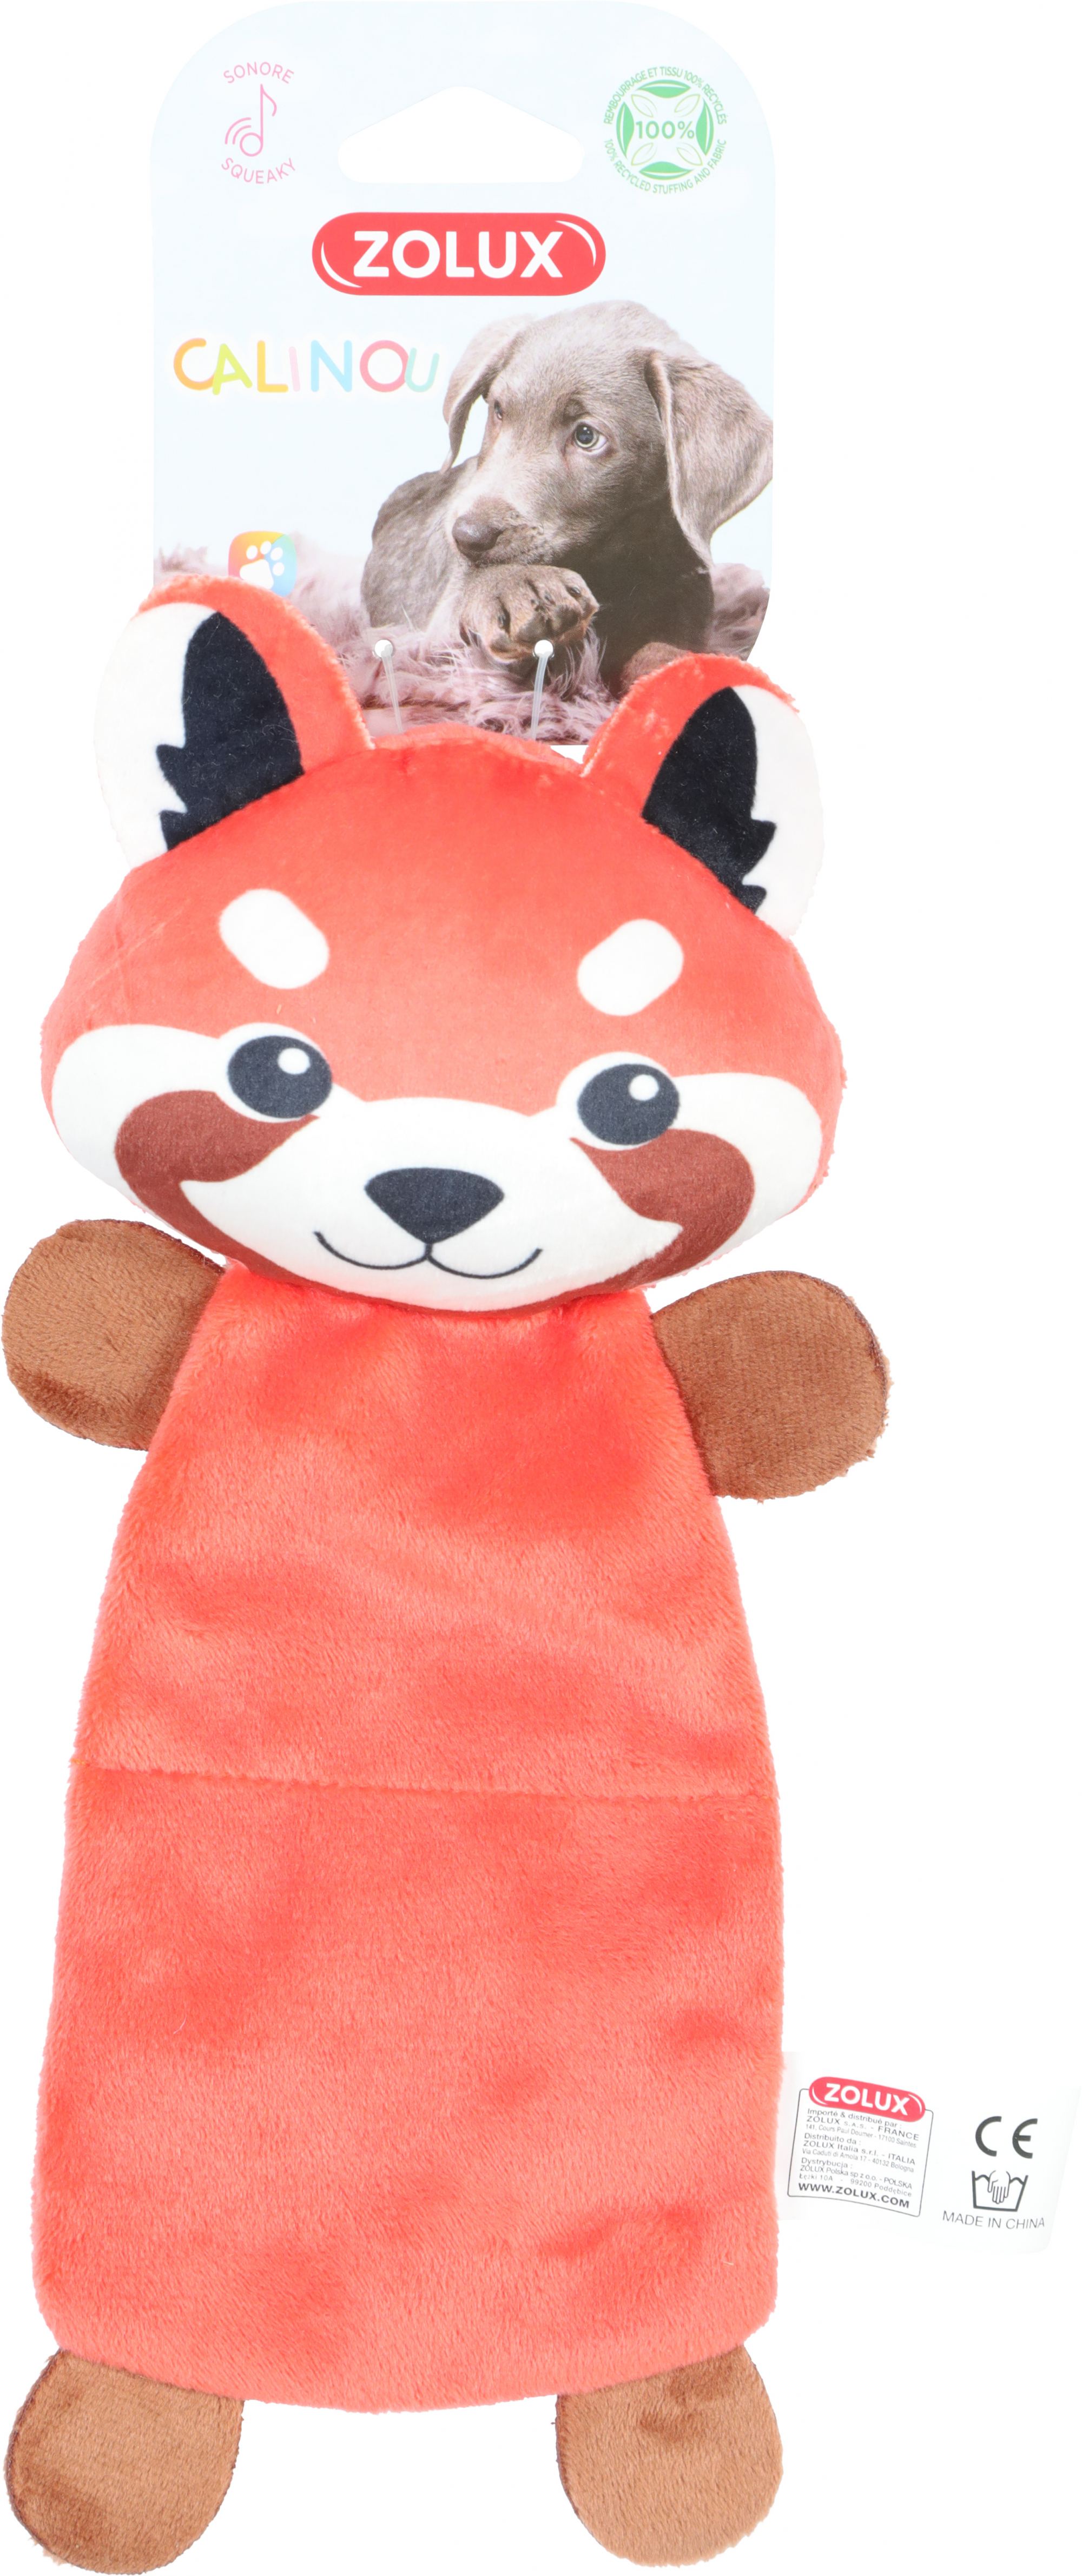 Brinquedo de pelúcia sonoro para filhote Calinou panda doudou